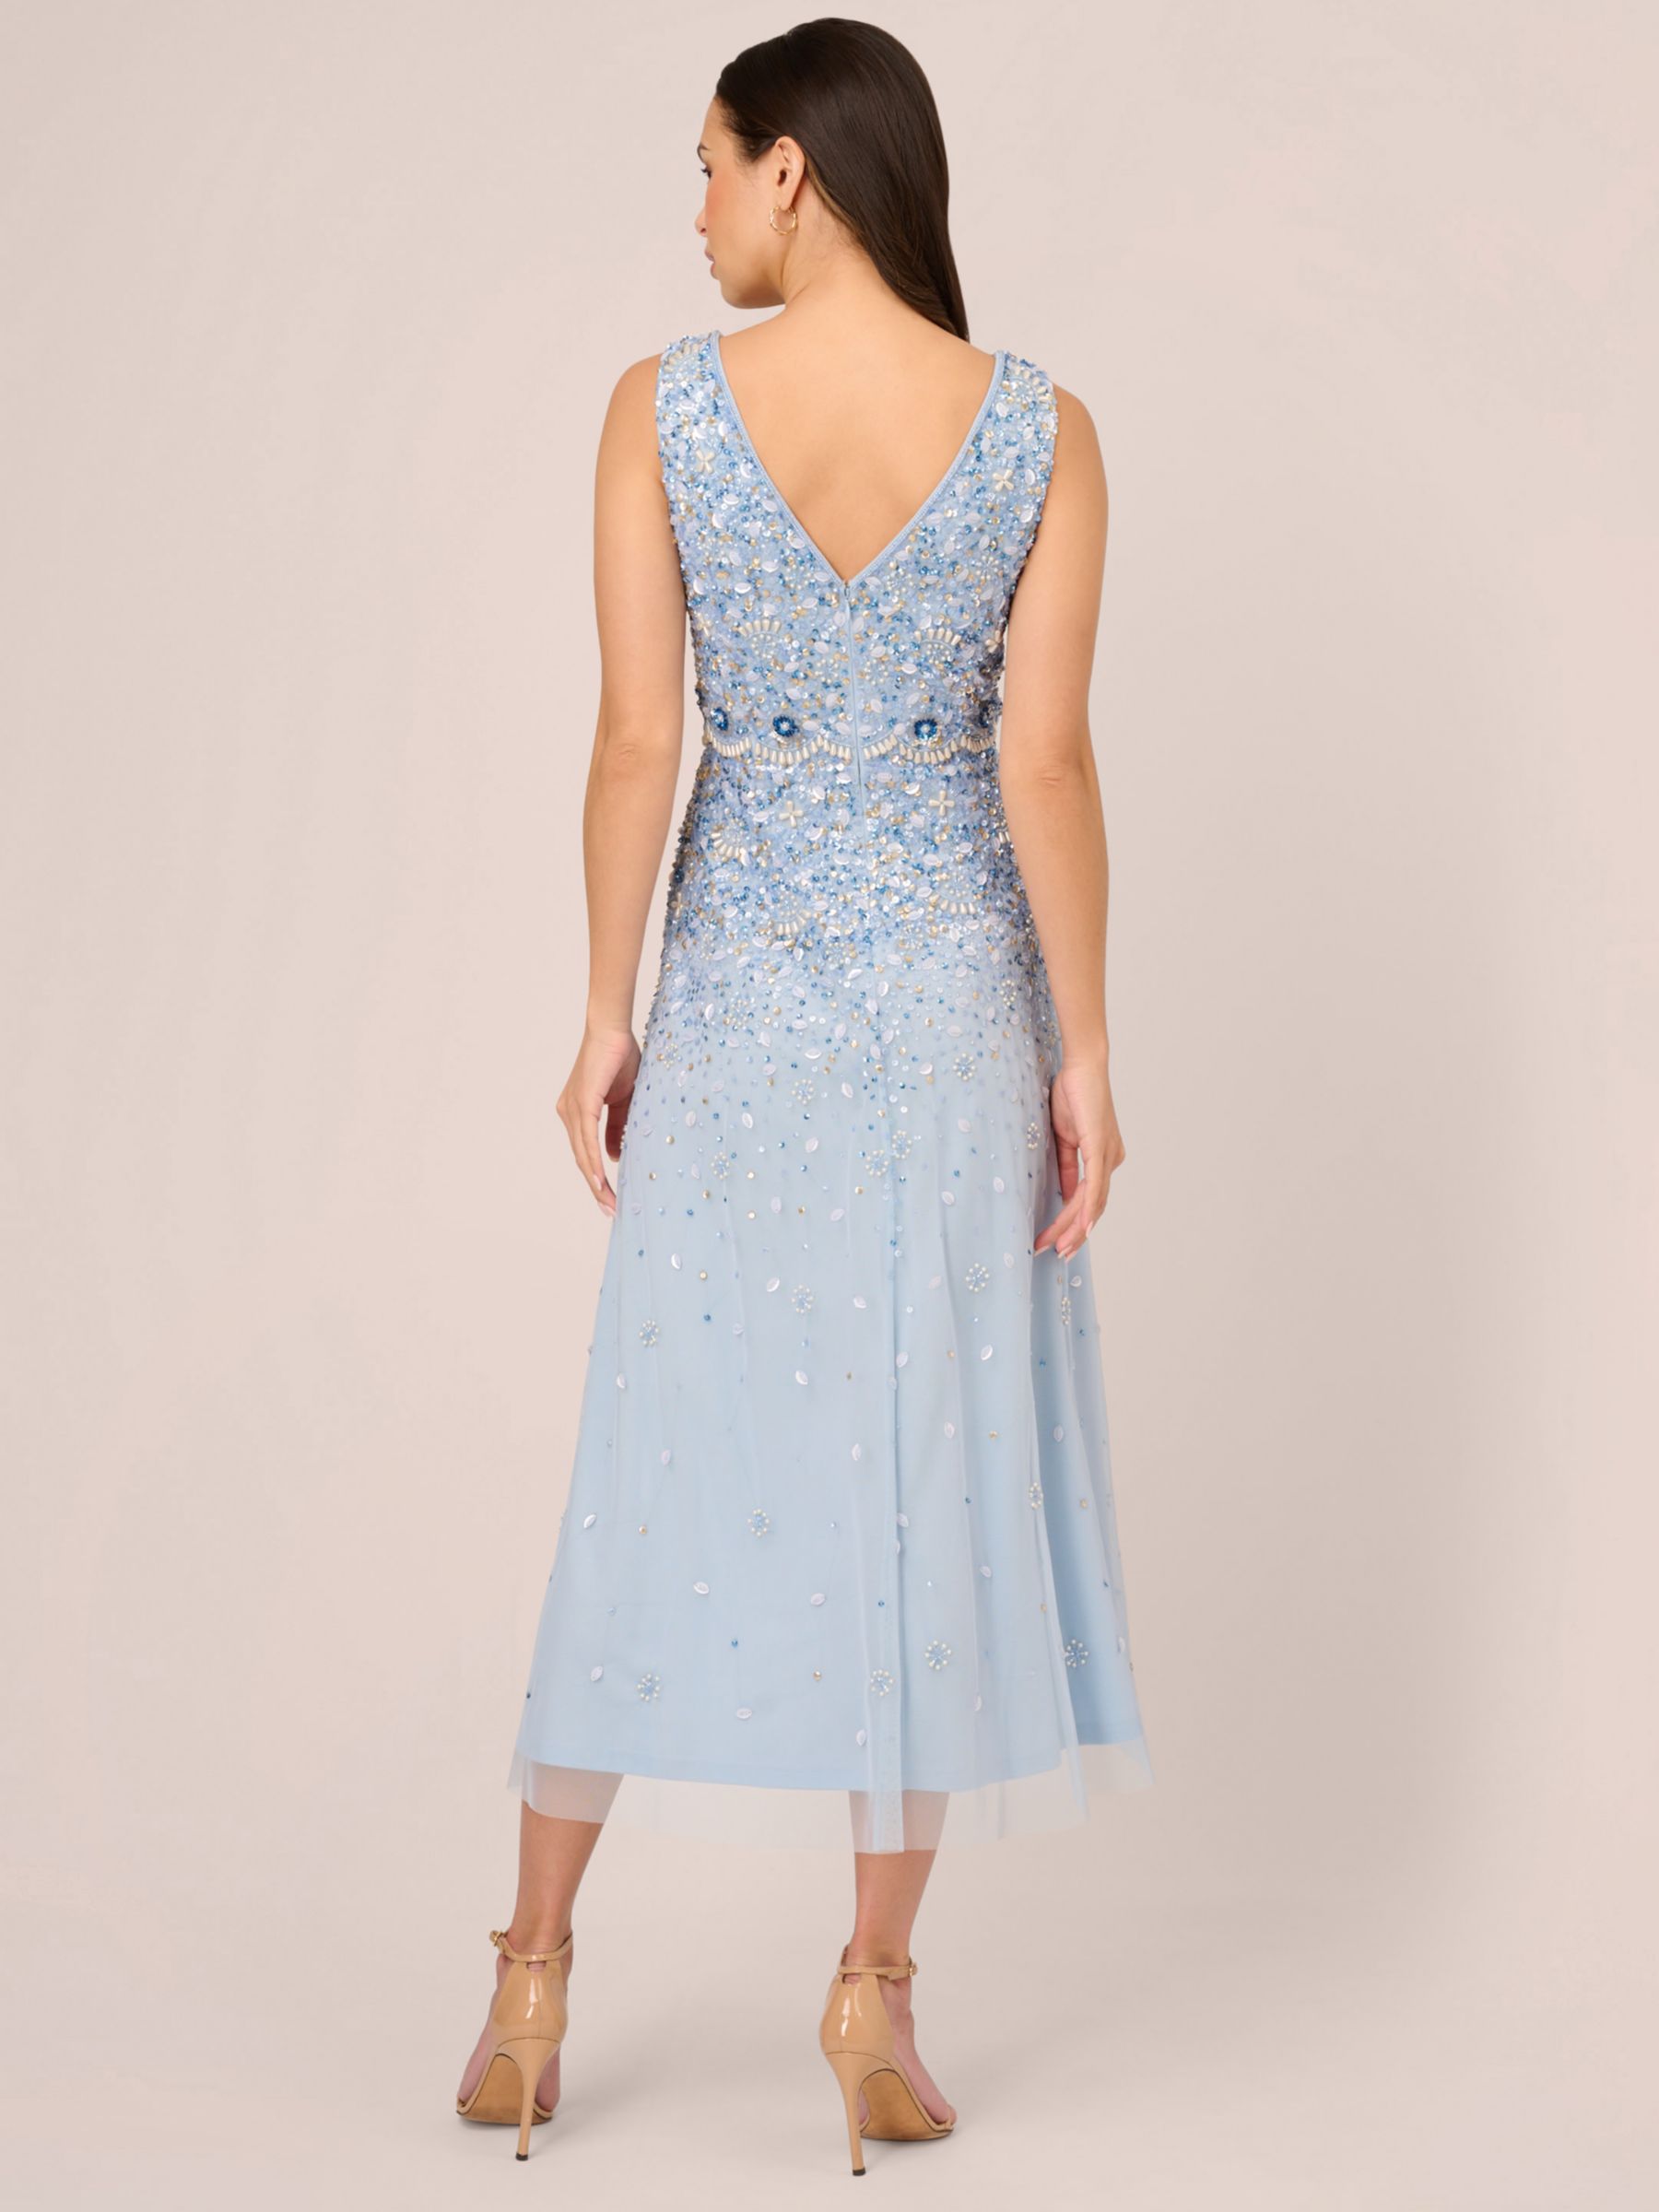 Adrianna Papell Beaded Mesh Dress, Elegant Sky, Elegant Sky, 8